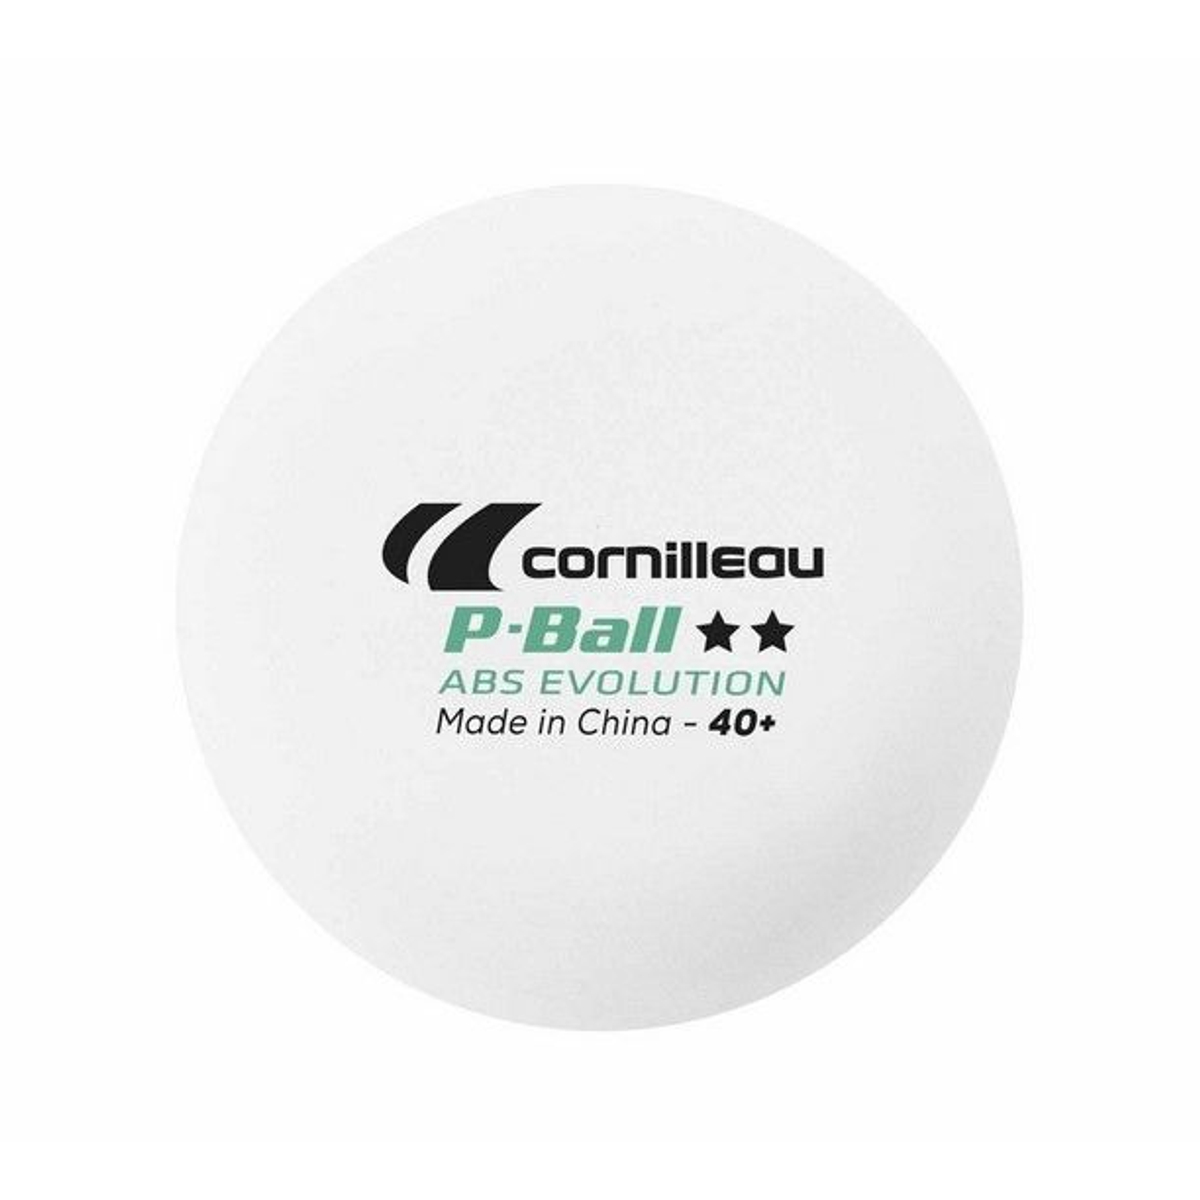 Cornilleau P-Ball ABS Evolution 2** ITTF